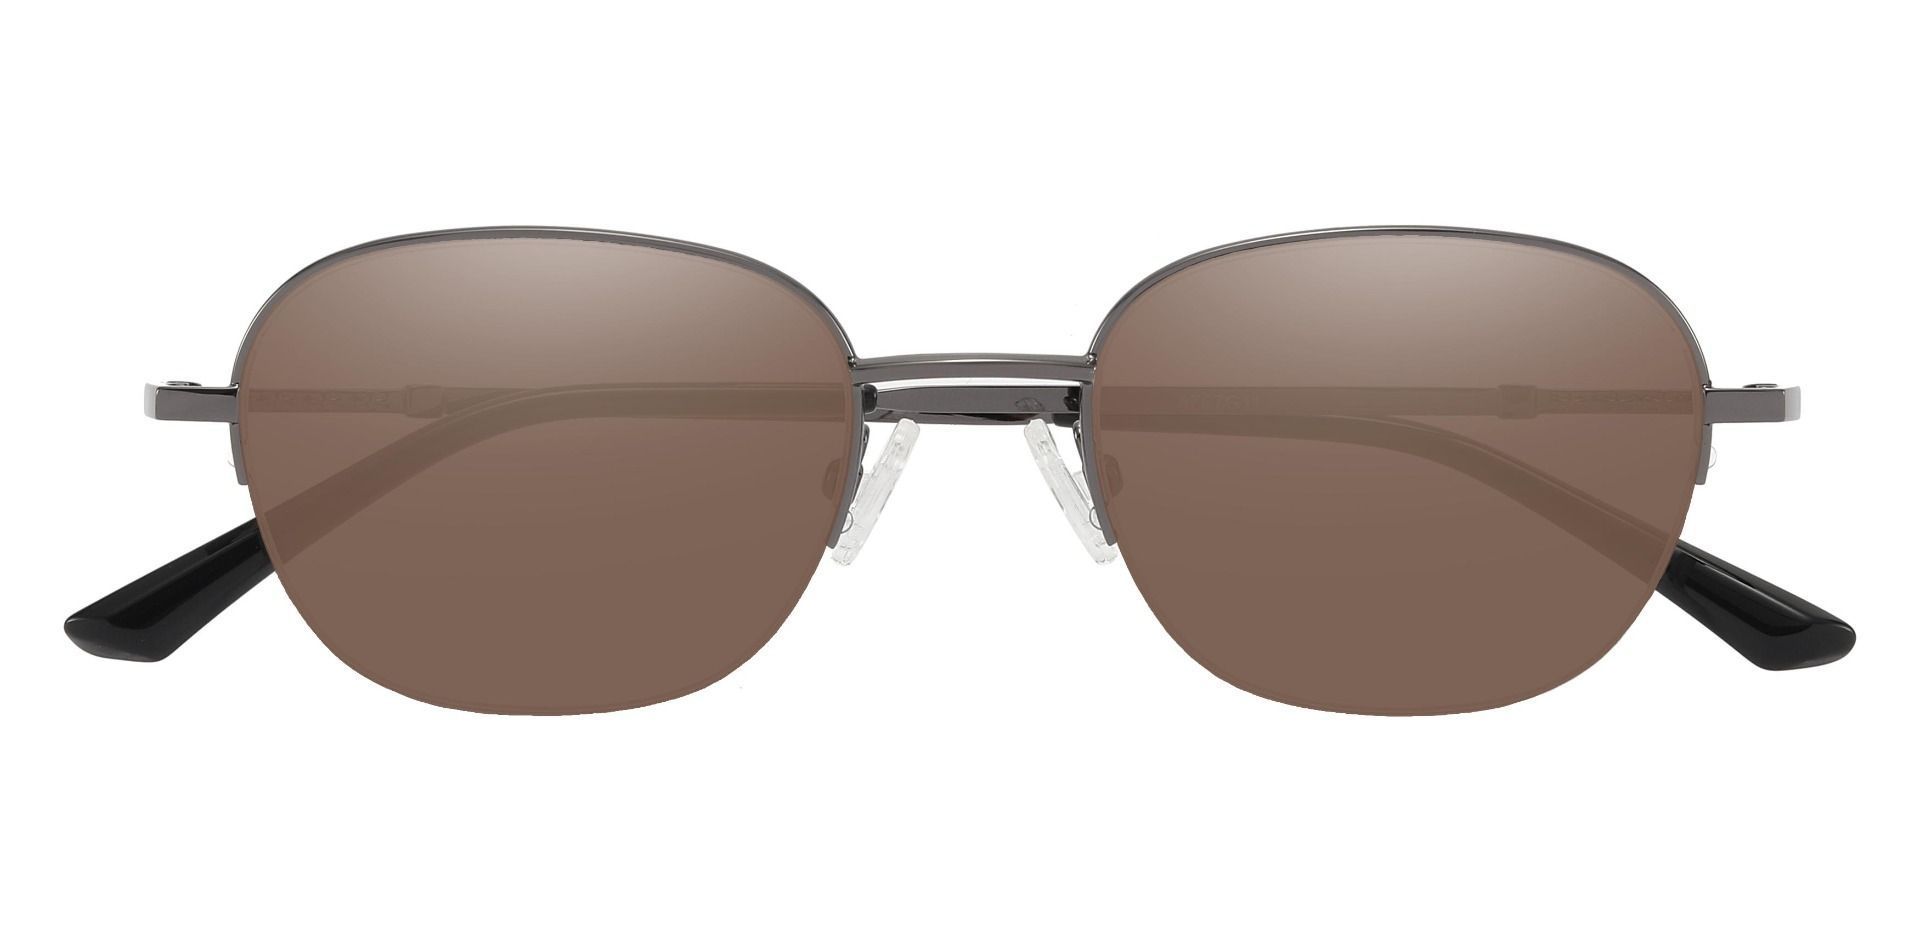 Rochester Oval Prescription Sunglasses - Gray Frame With Brown Lenses